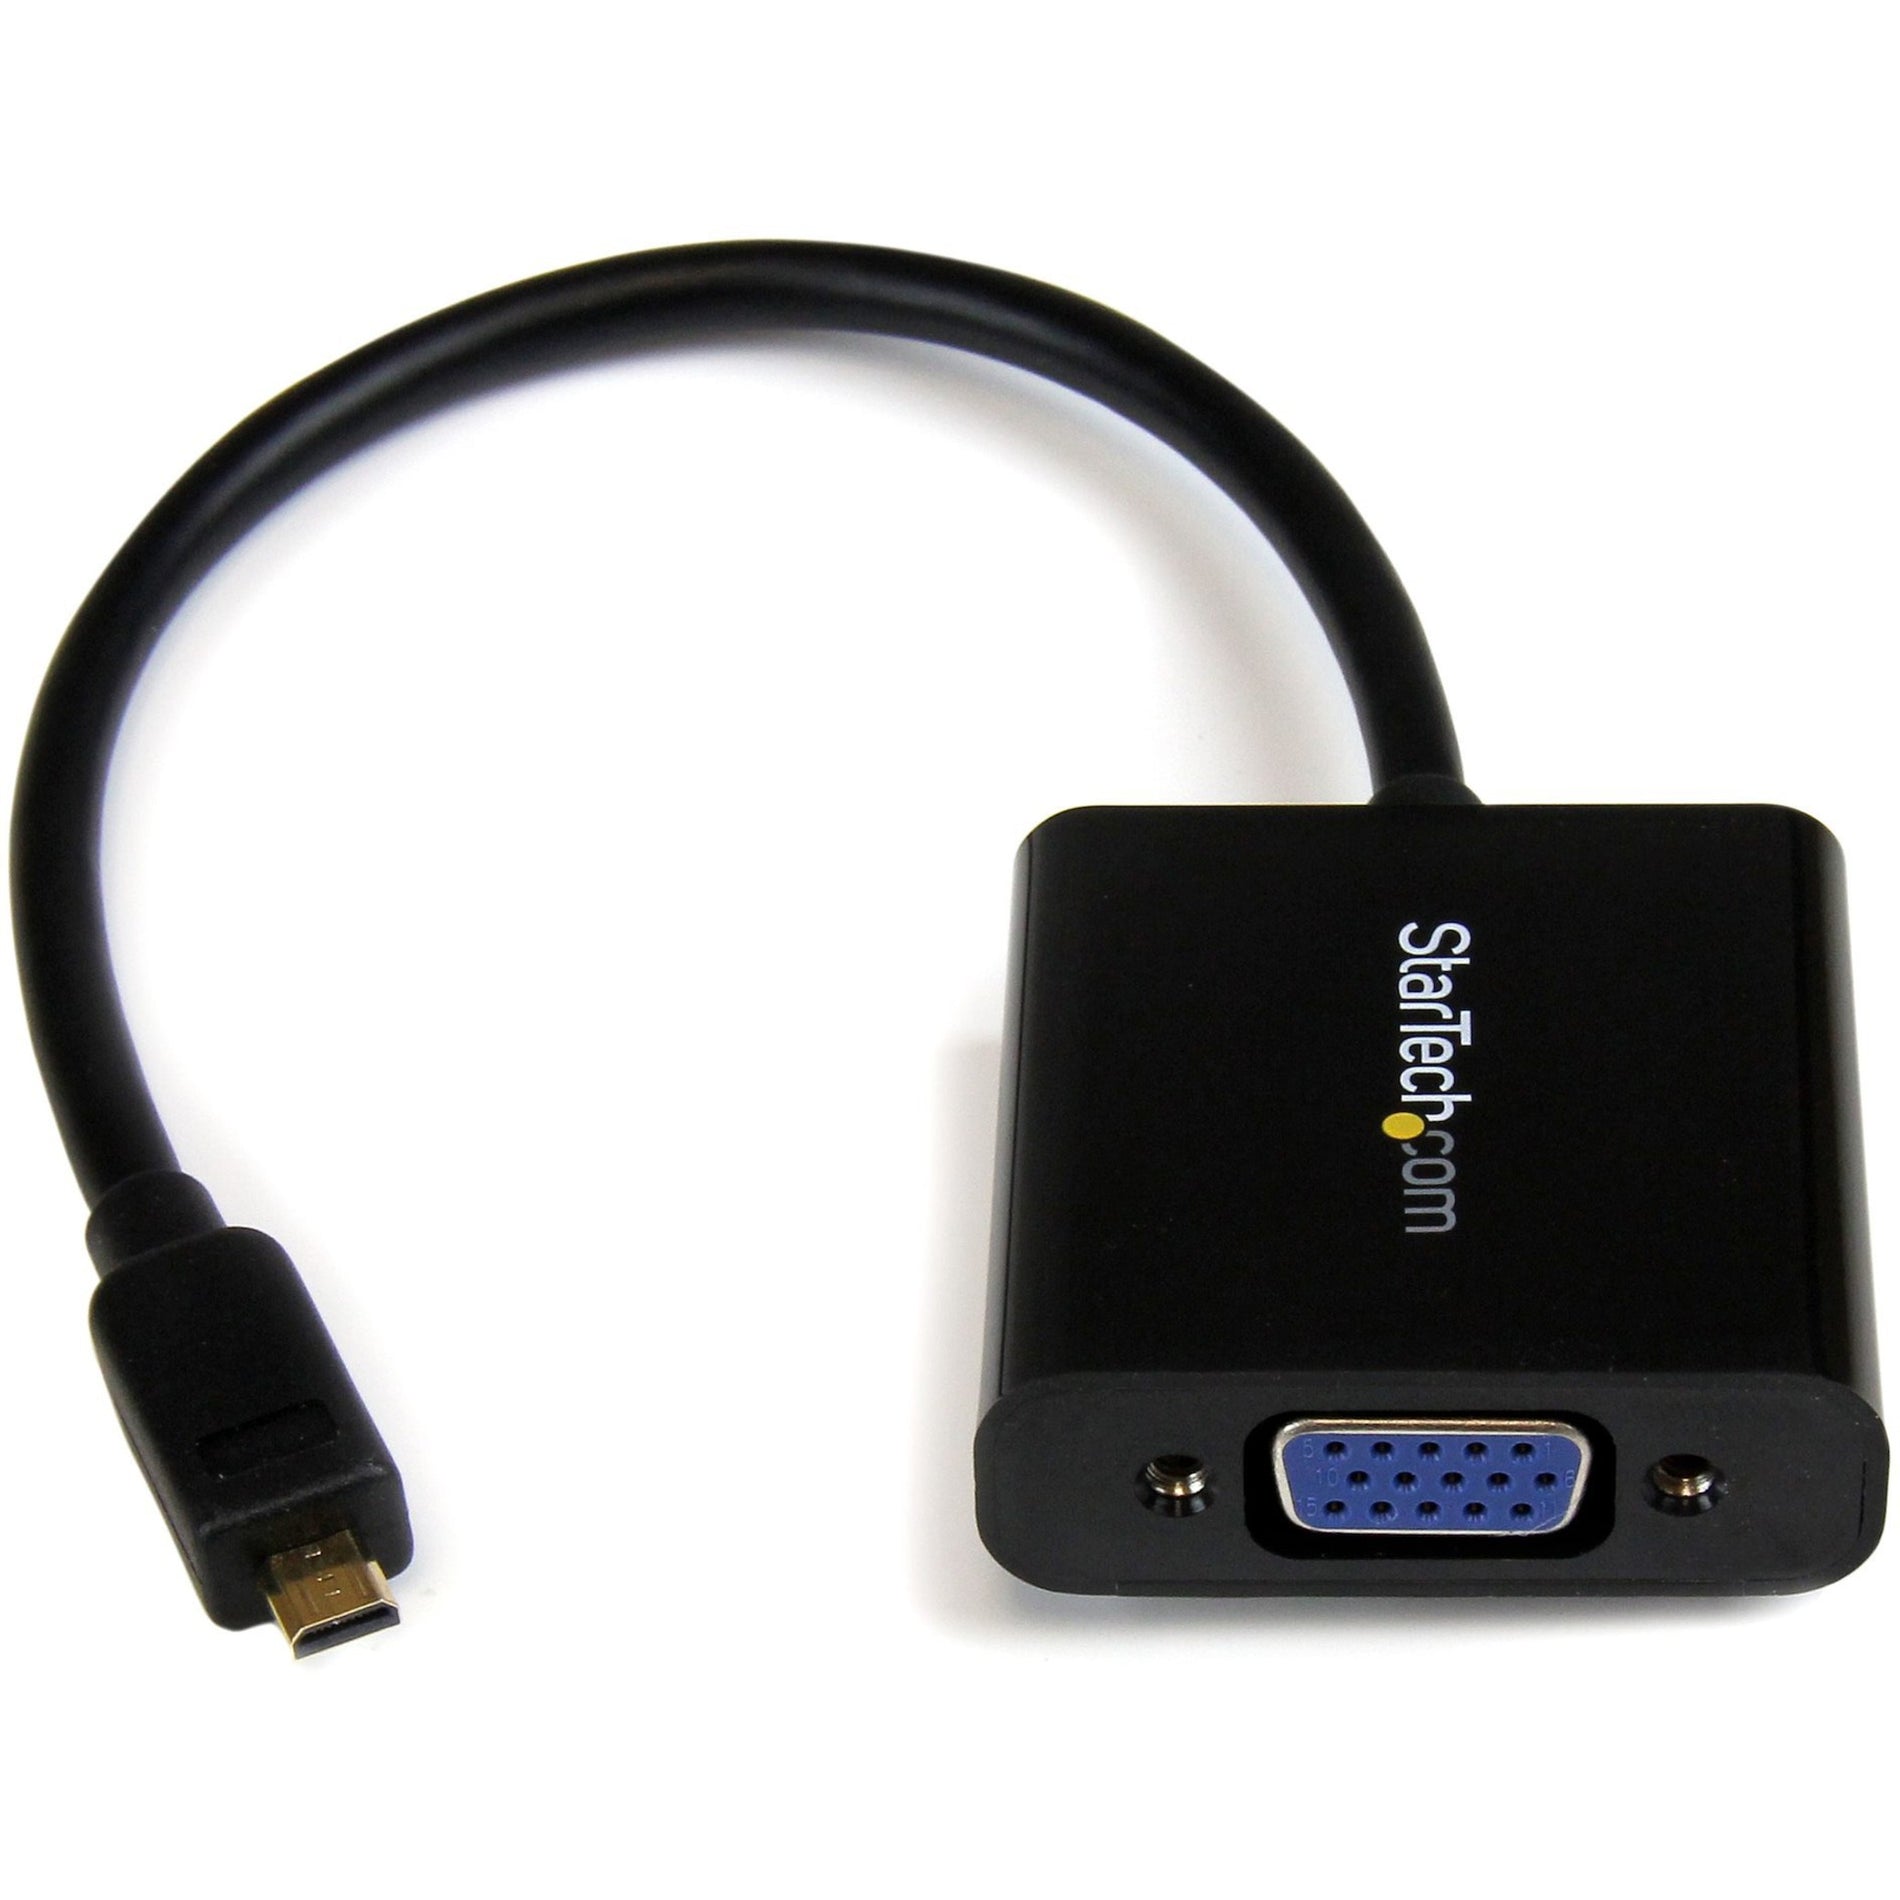 StarTech.com MCHD2VGAE2 HDMI/VGA Video Cable, Micro HDMI to VGA Adapter Converter for Smartphones, Ultrabook, Tablet - 1920x1200